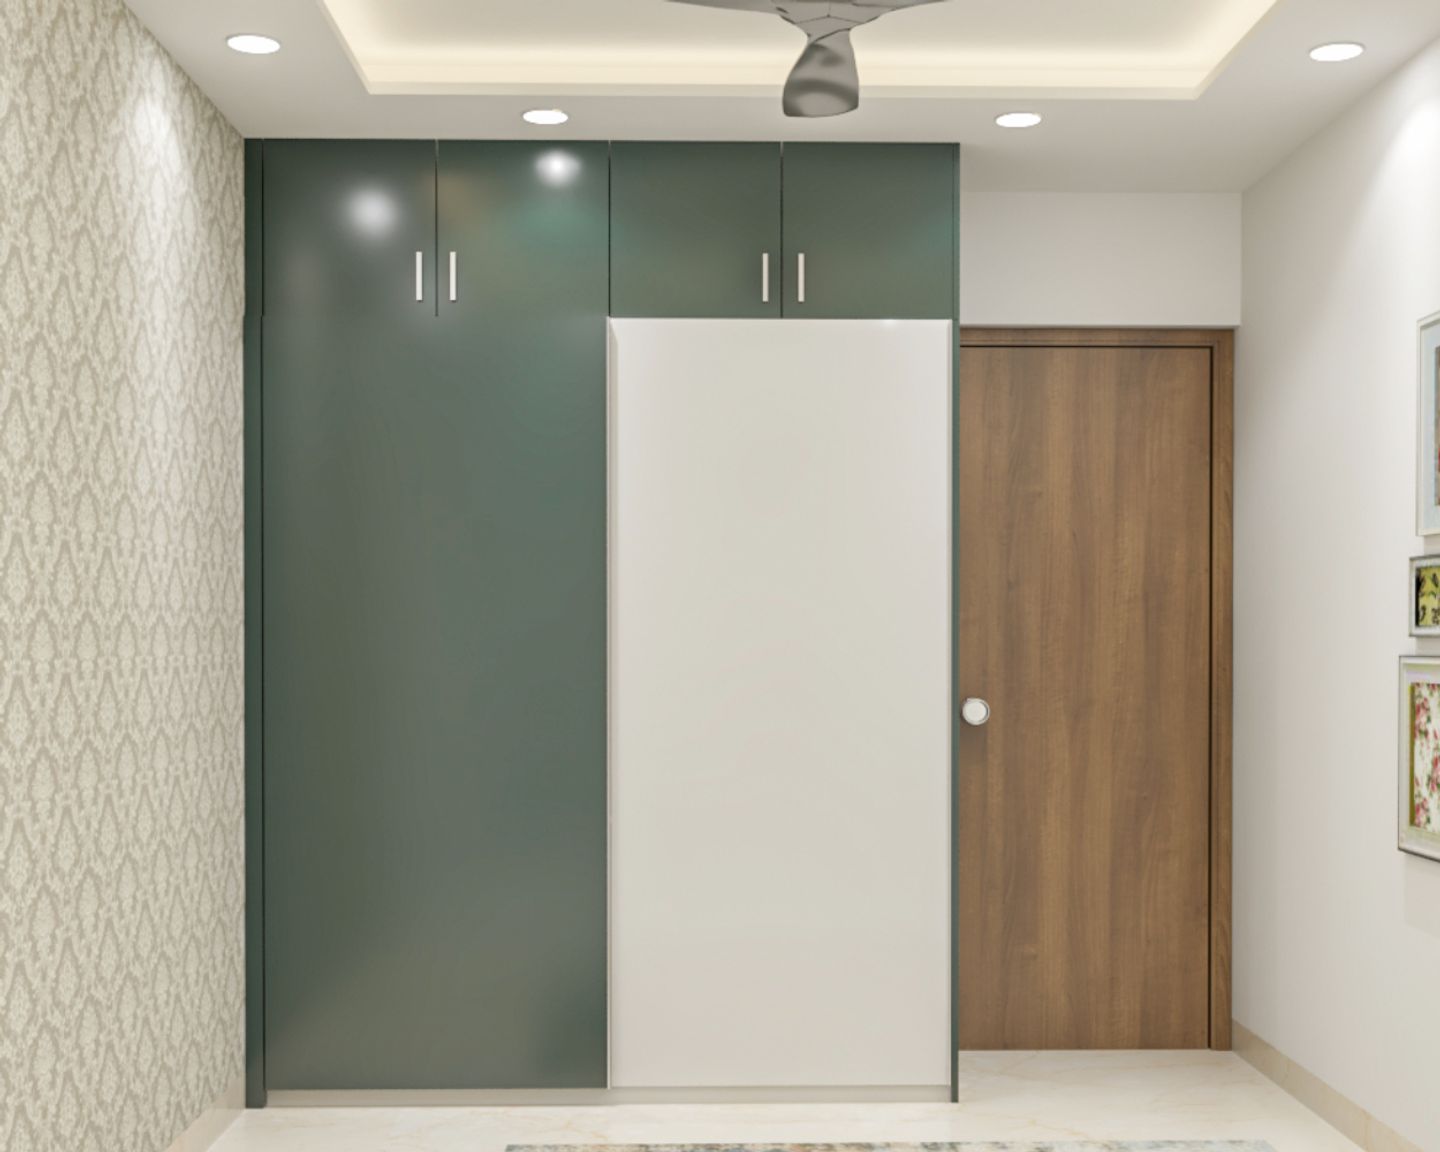 Modern 2-Door Sliding Wardrobe Design In Green And Frosty White- Livspace